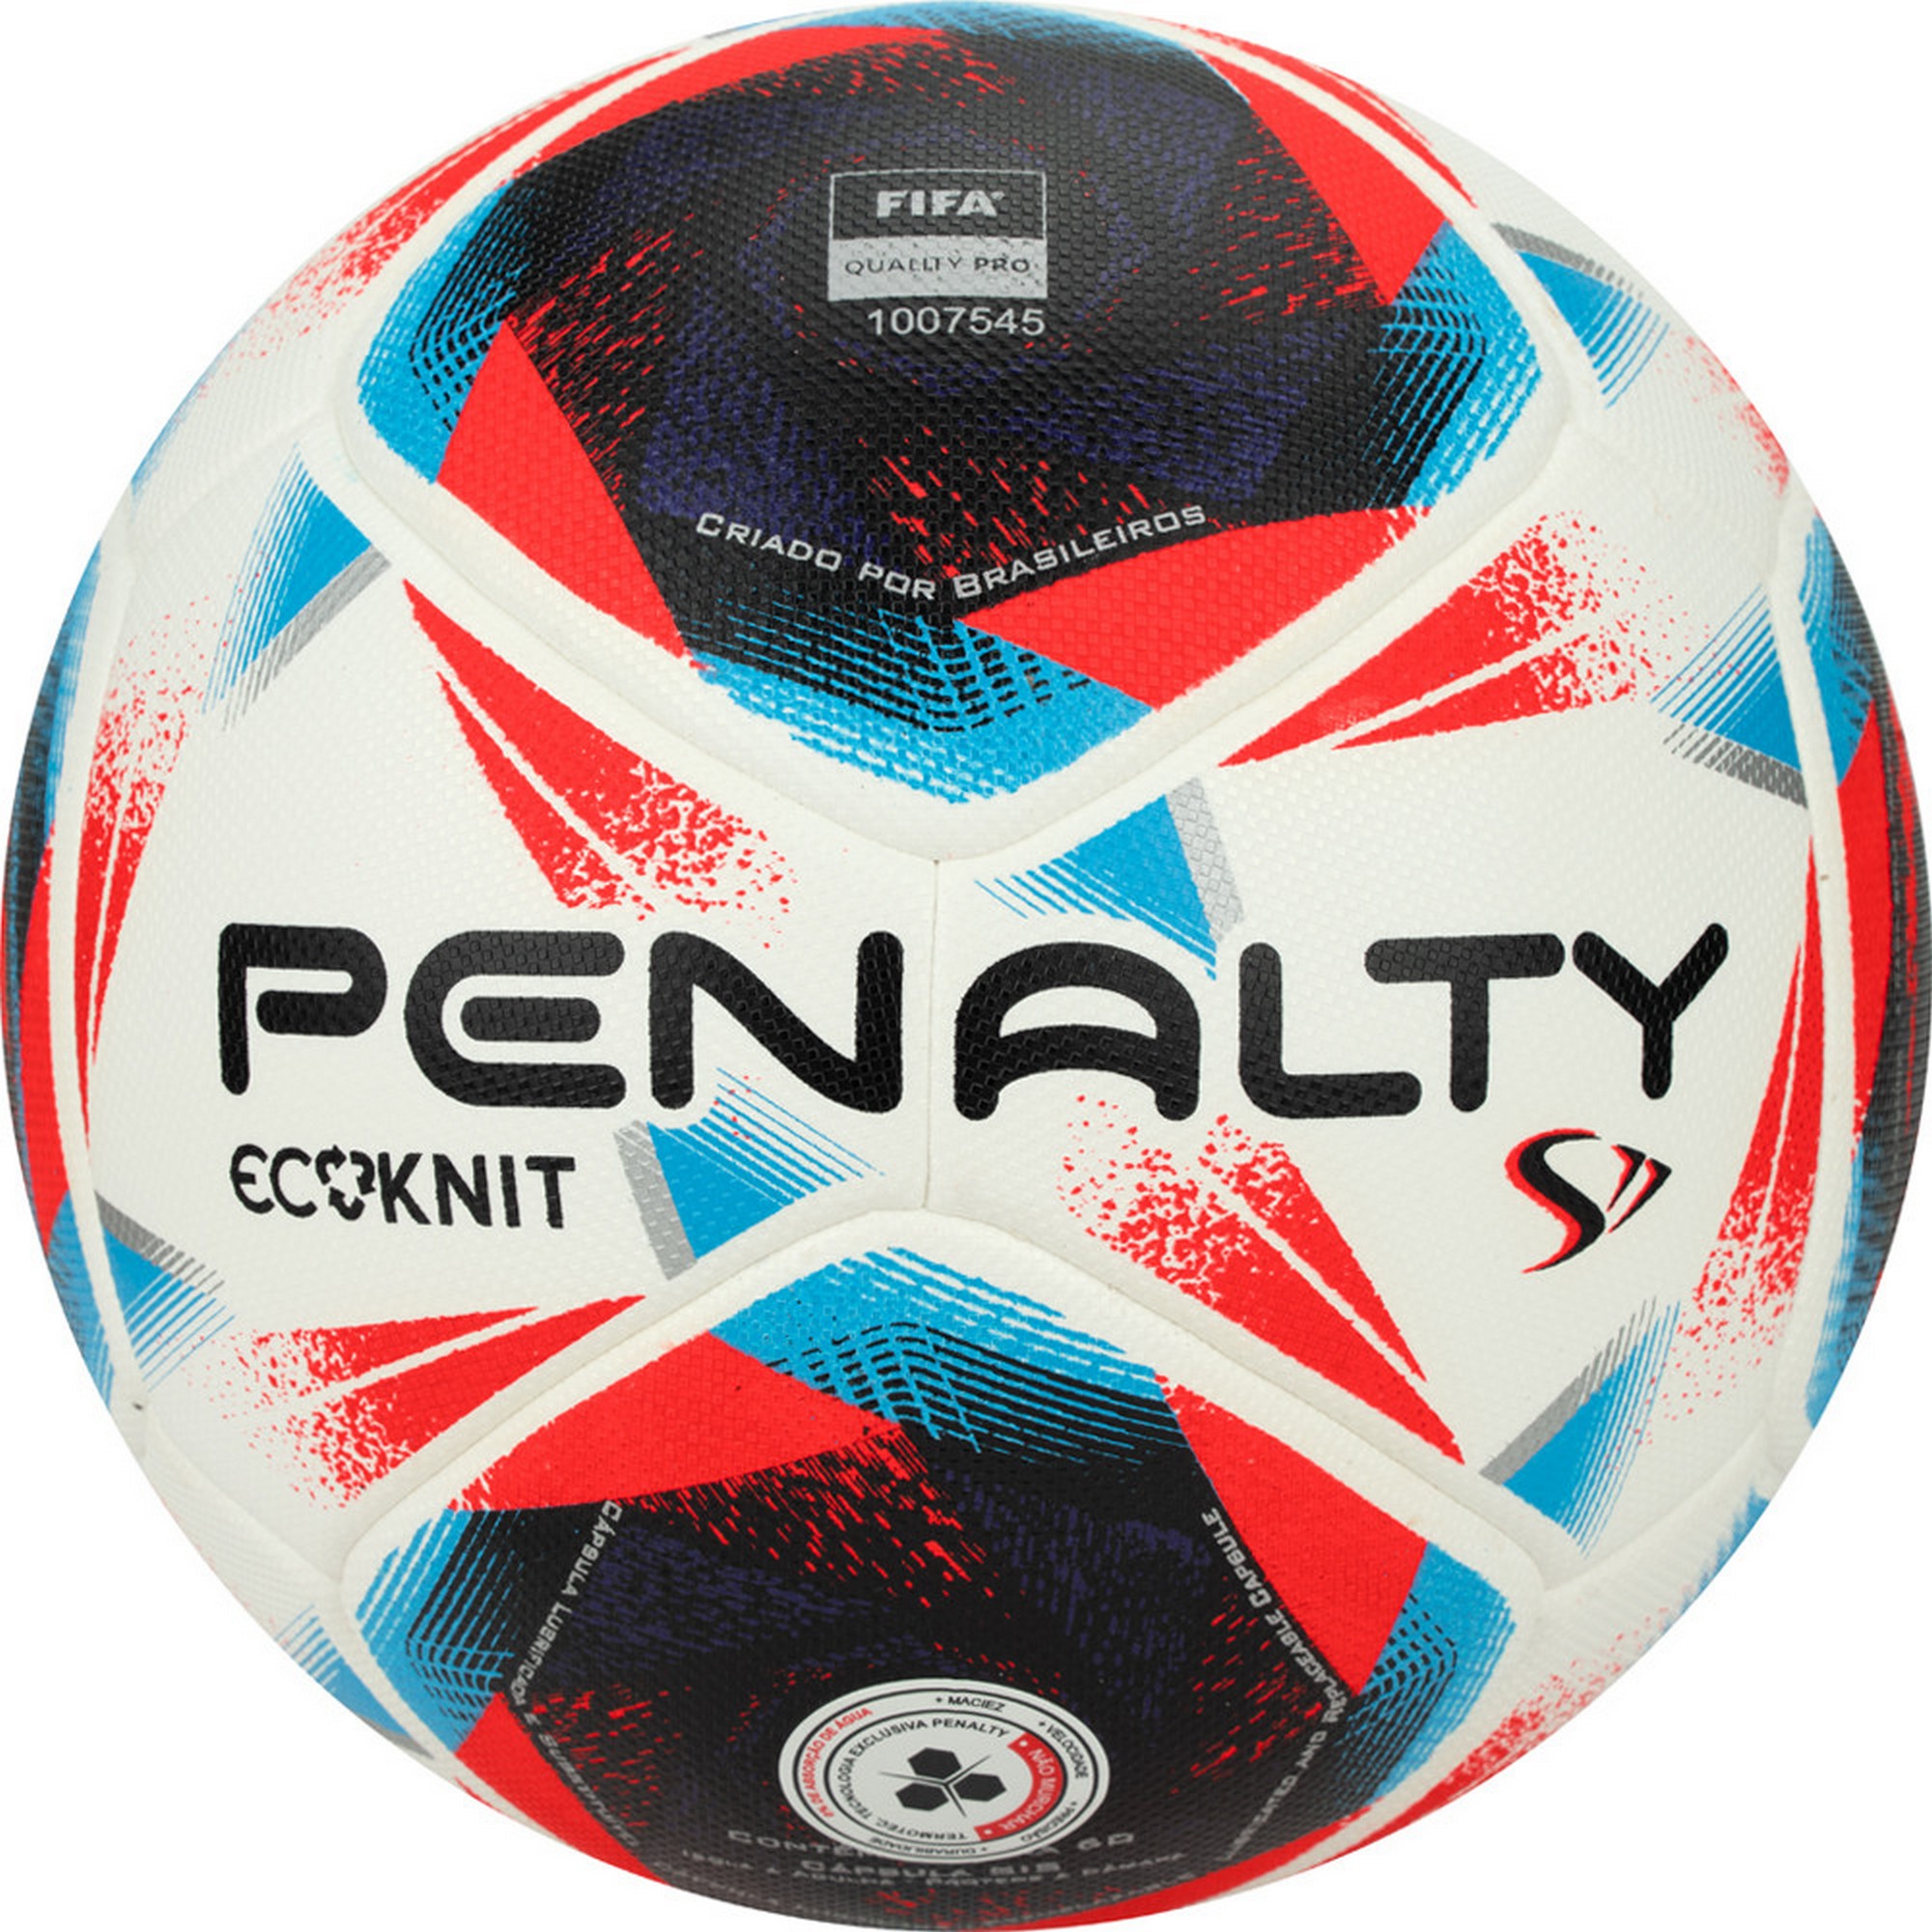   Penalty Bola Campo S11 ECOKNIT XXIII 5416321610-U FIFA Pro, .5